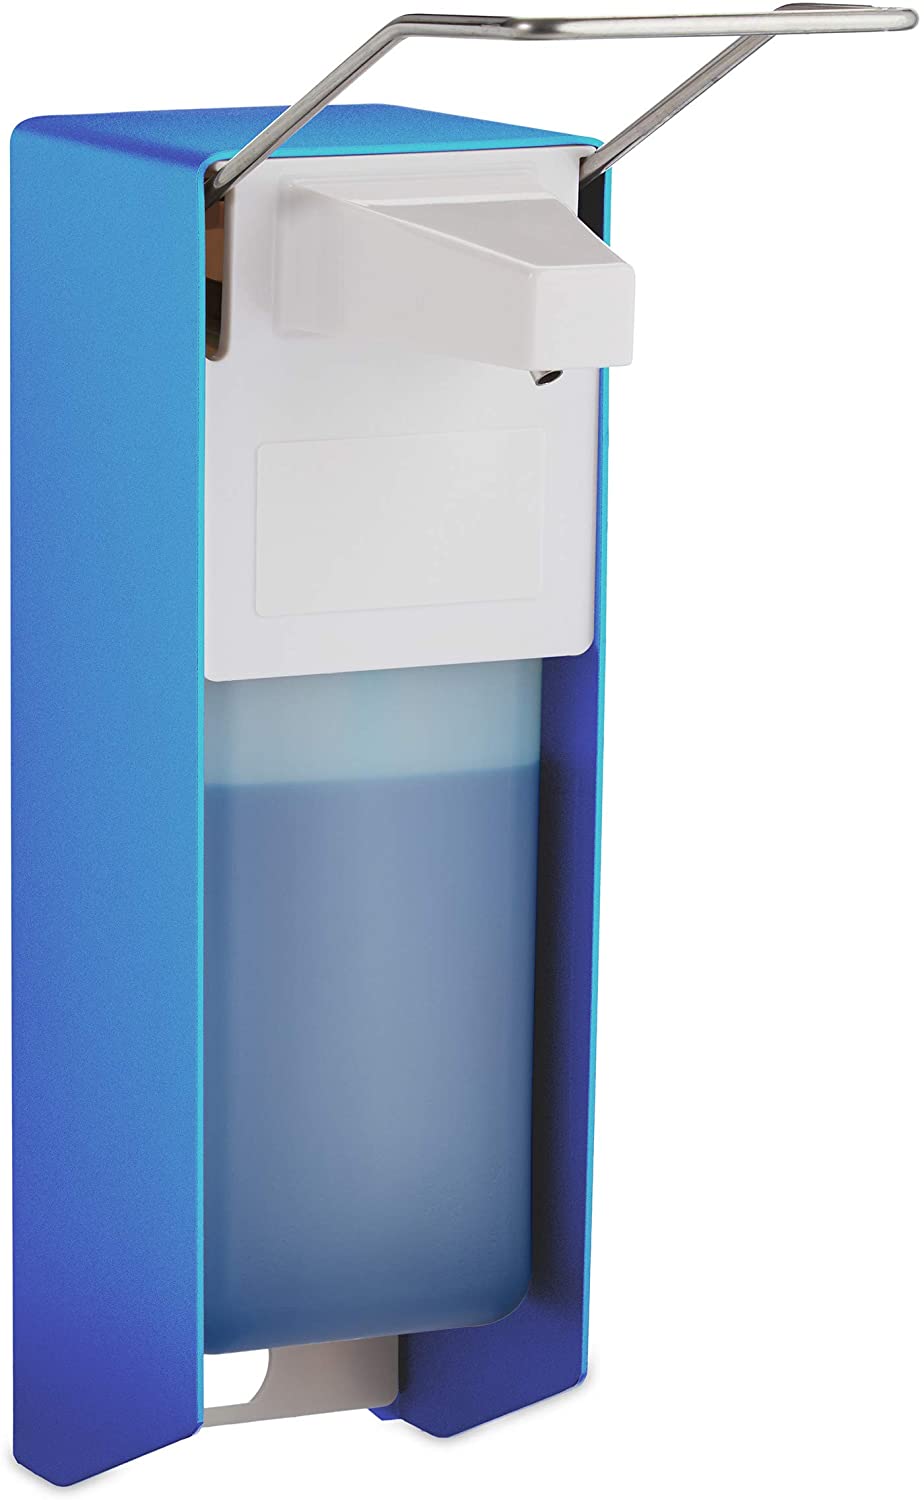 Relaxdays Euro Dispenser, 1000 ml, Disinfectant, Soap, Elbow Lever, Wall Mount, Hygiene Dispenser, Blue